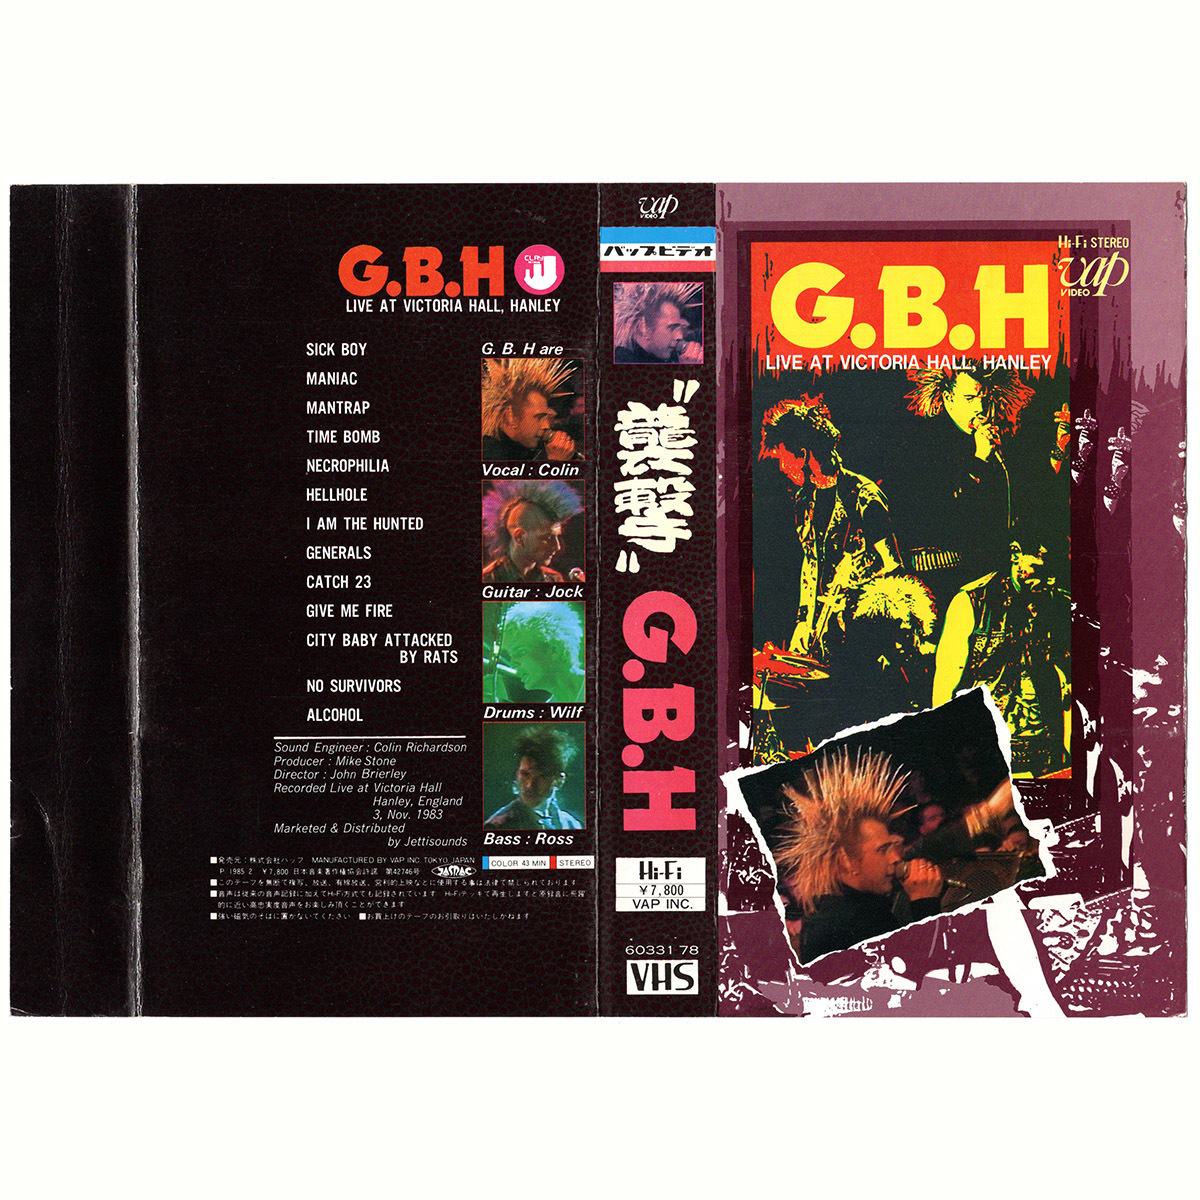 《VHS》 G.B.H / 襲撃 Live at Victoria Hall, Hanley 1983-11-3 [60331 78]の画像4